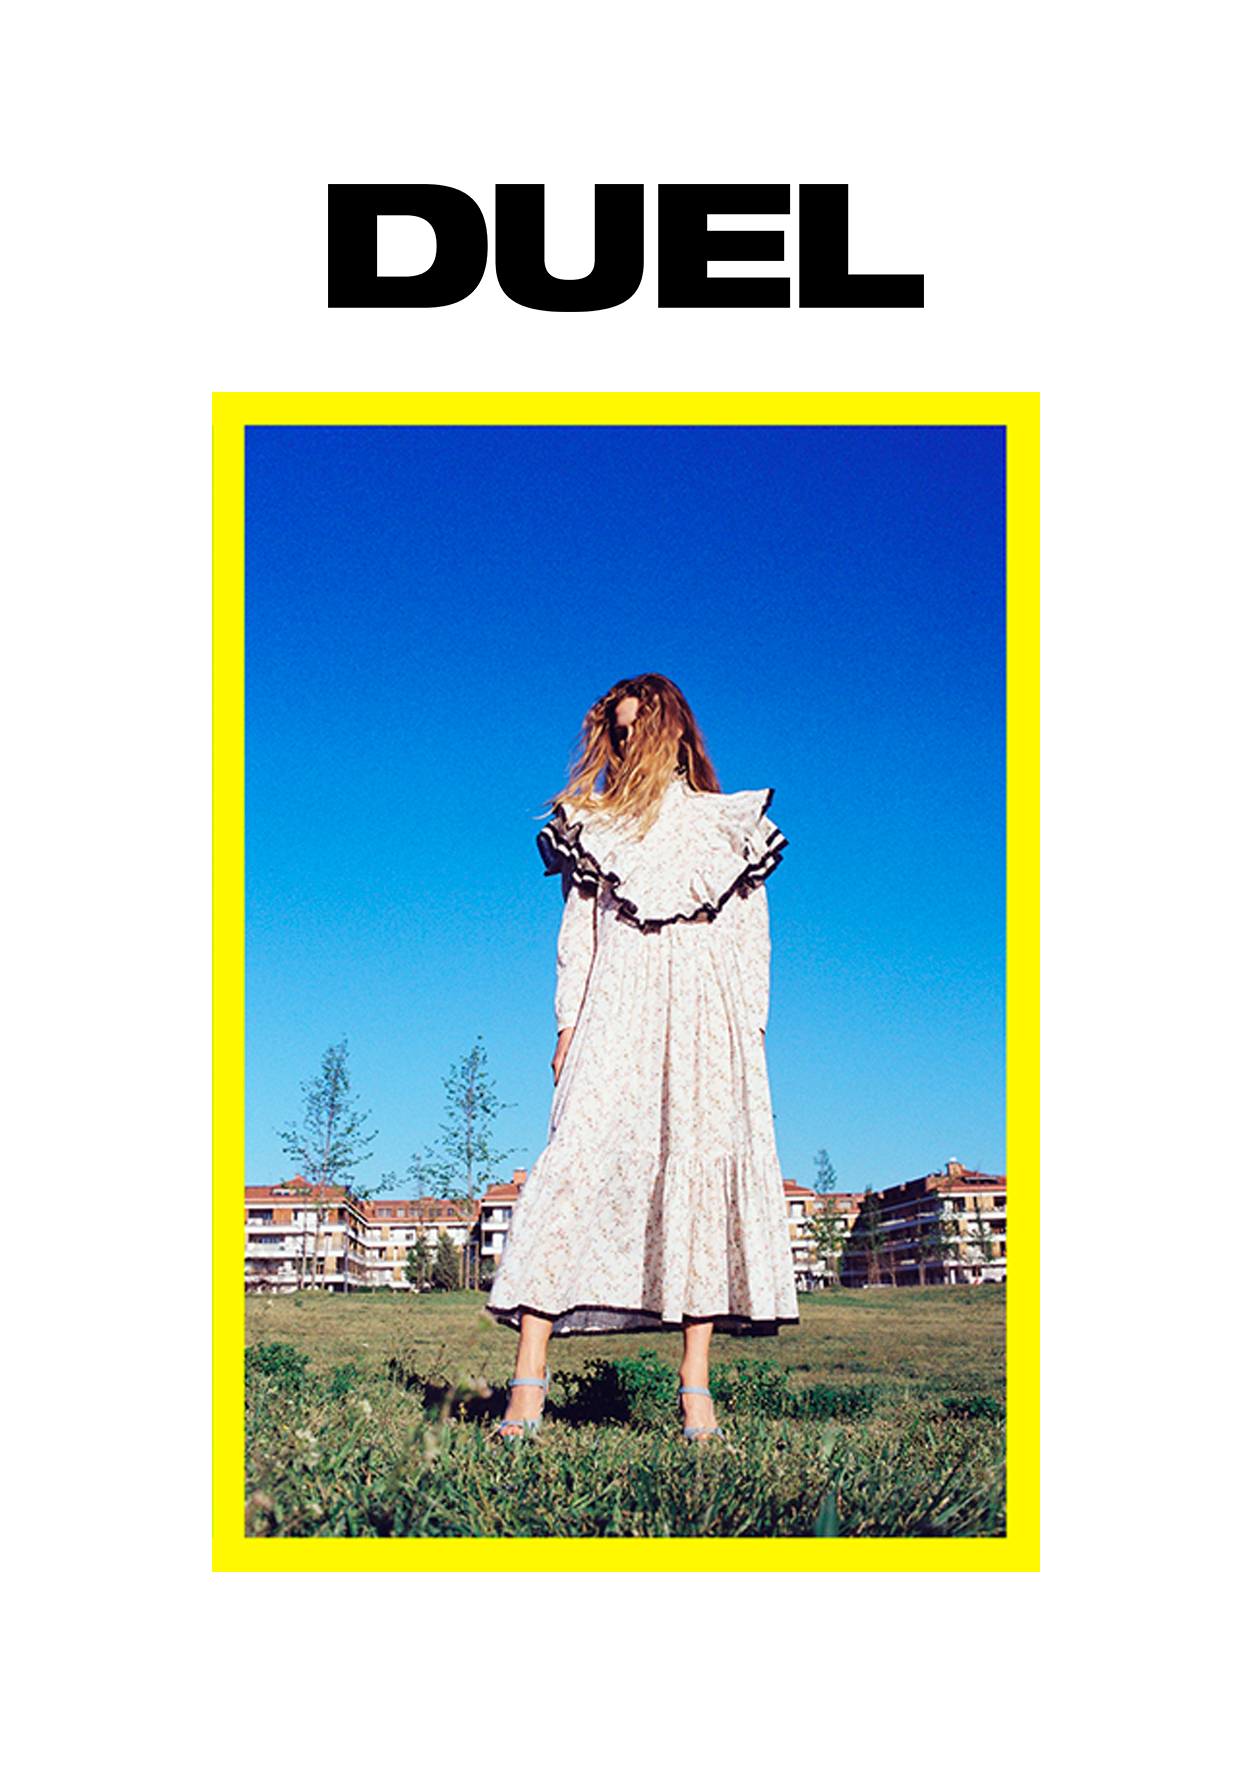 duel magazine